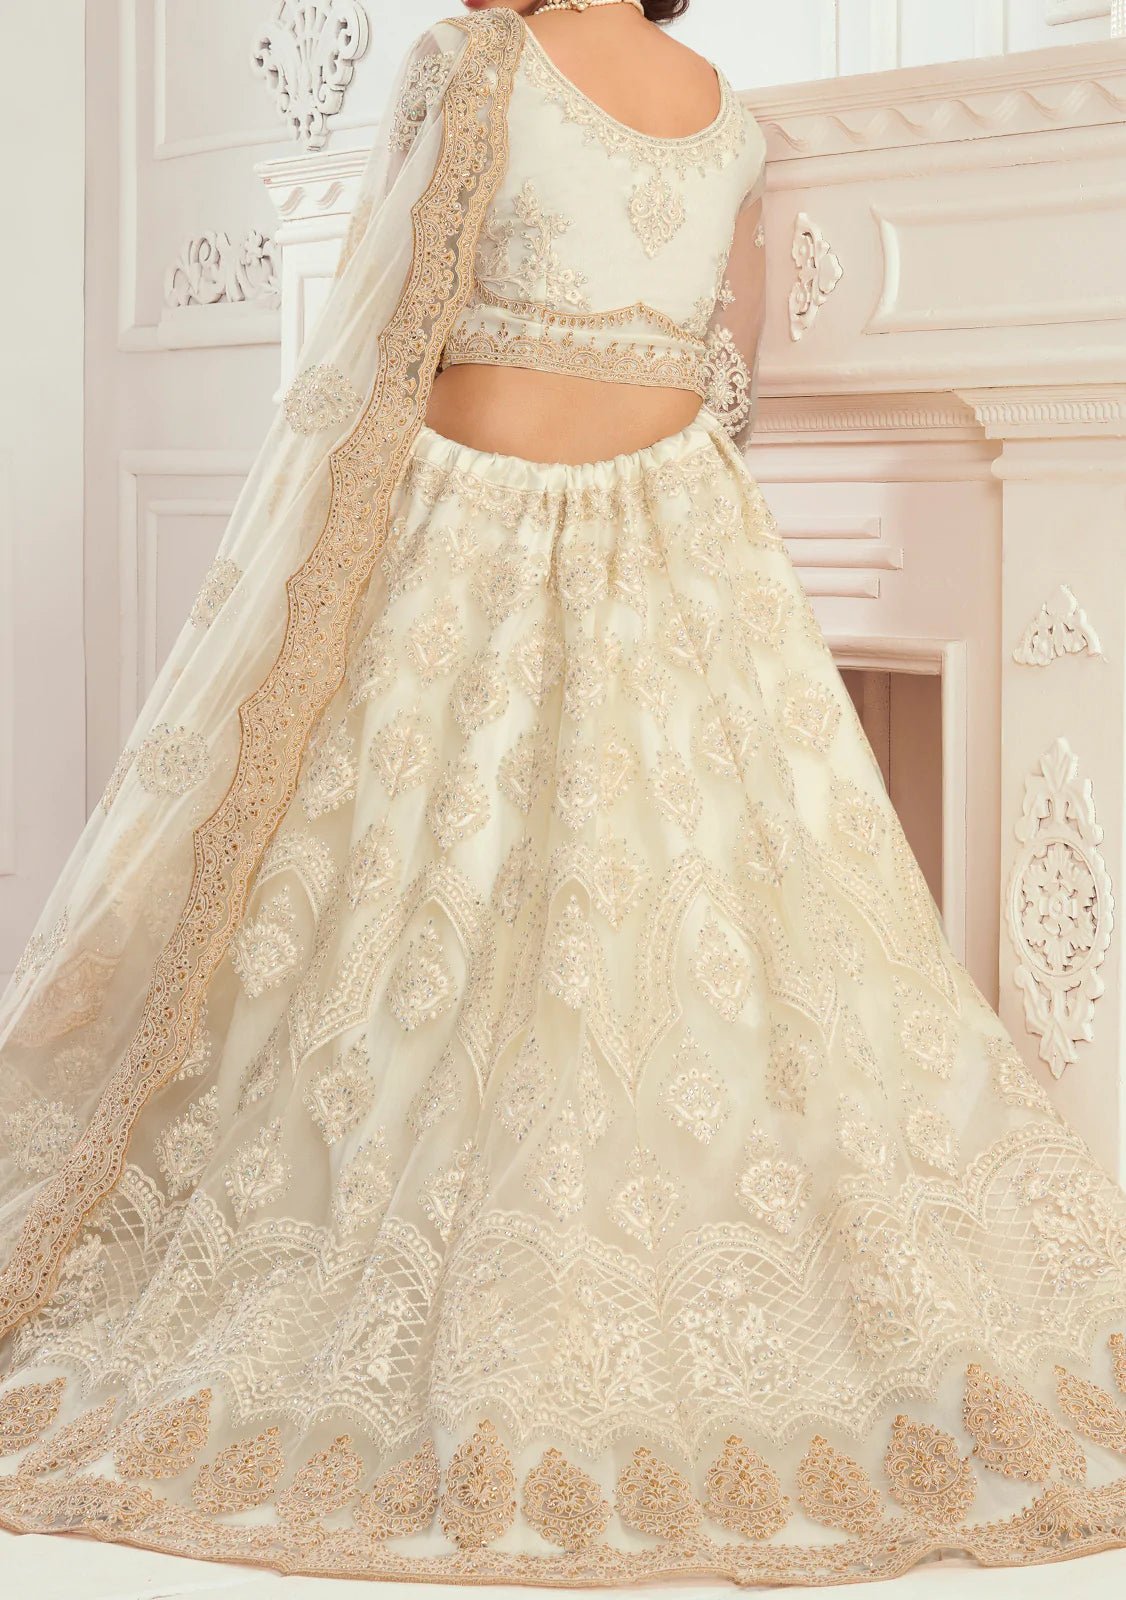 Alizeh Heritage Designer Bridal Wear Lehenga Choli - db20912